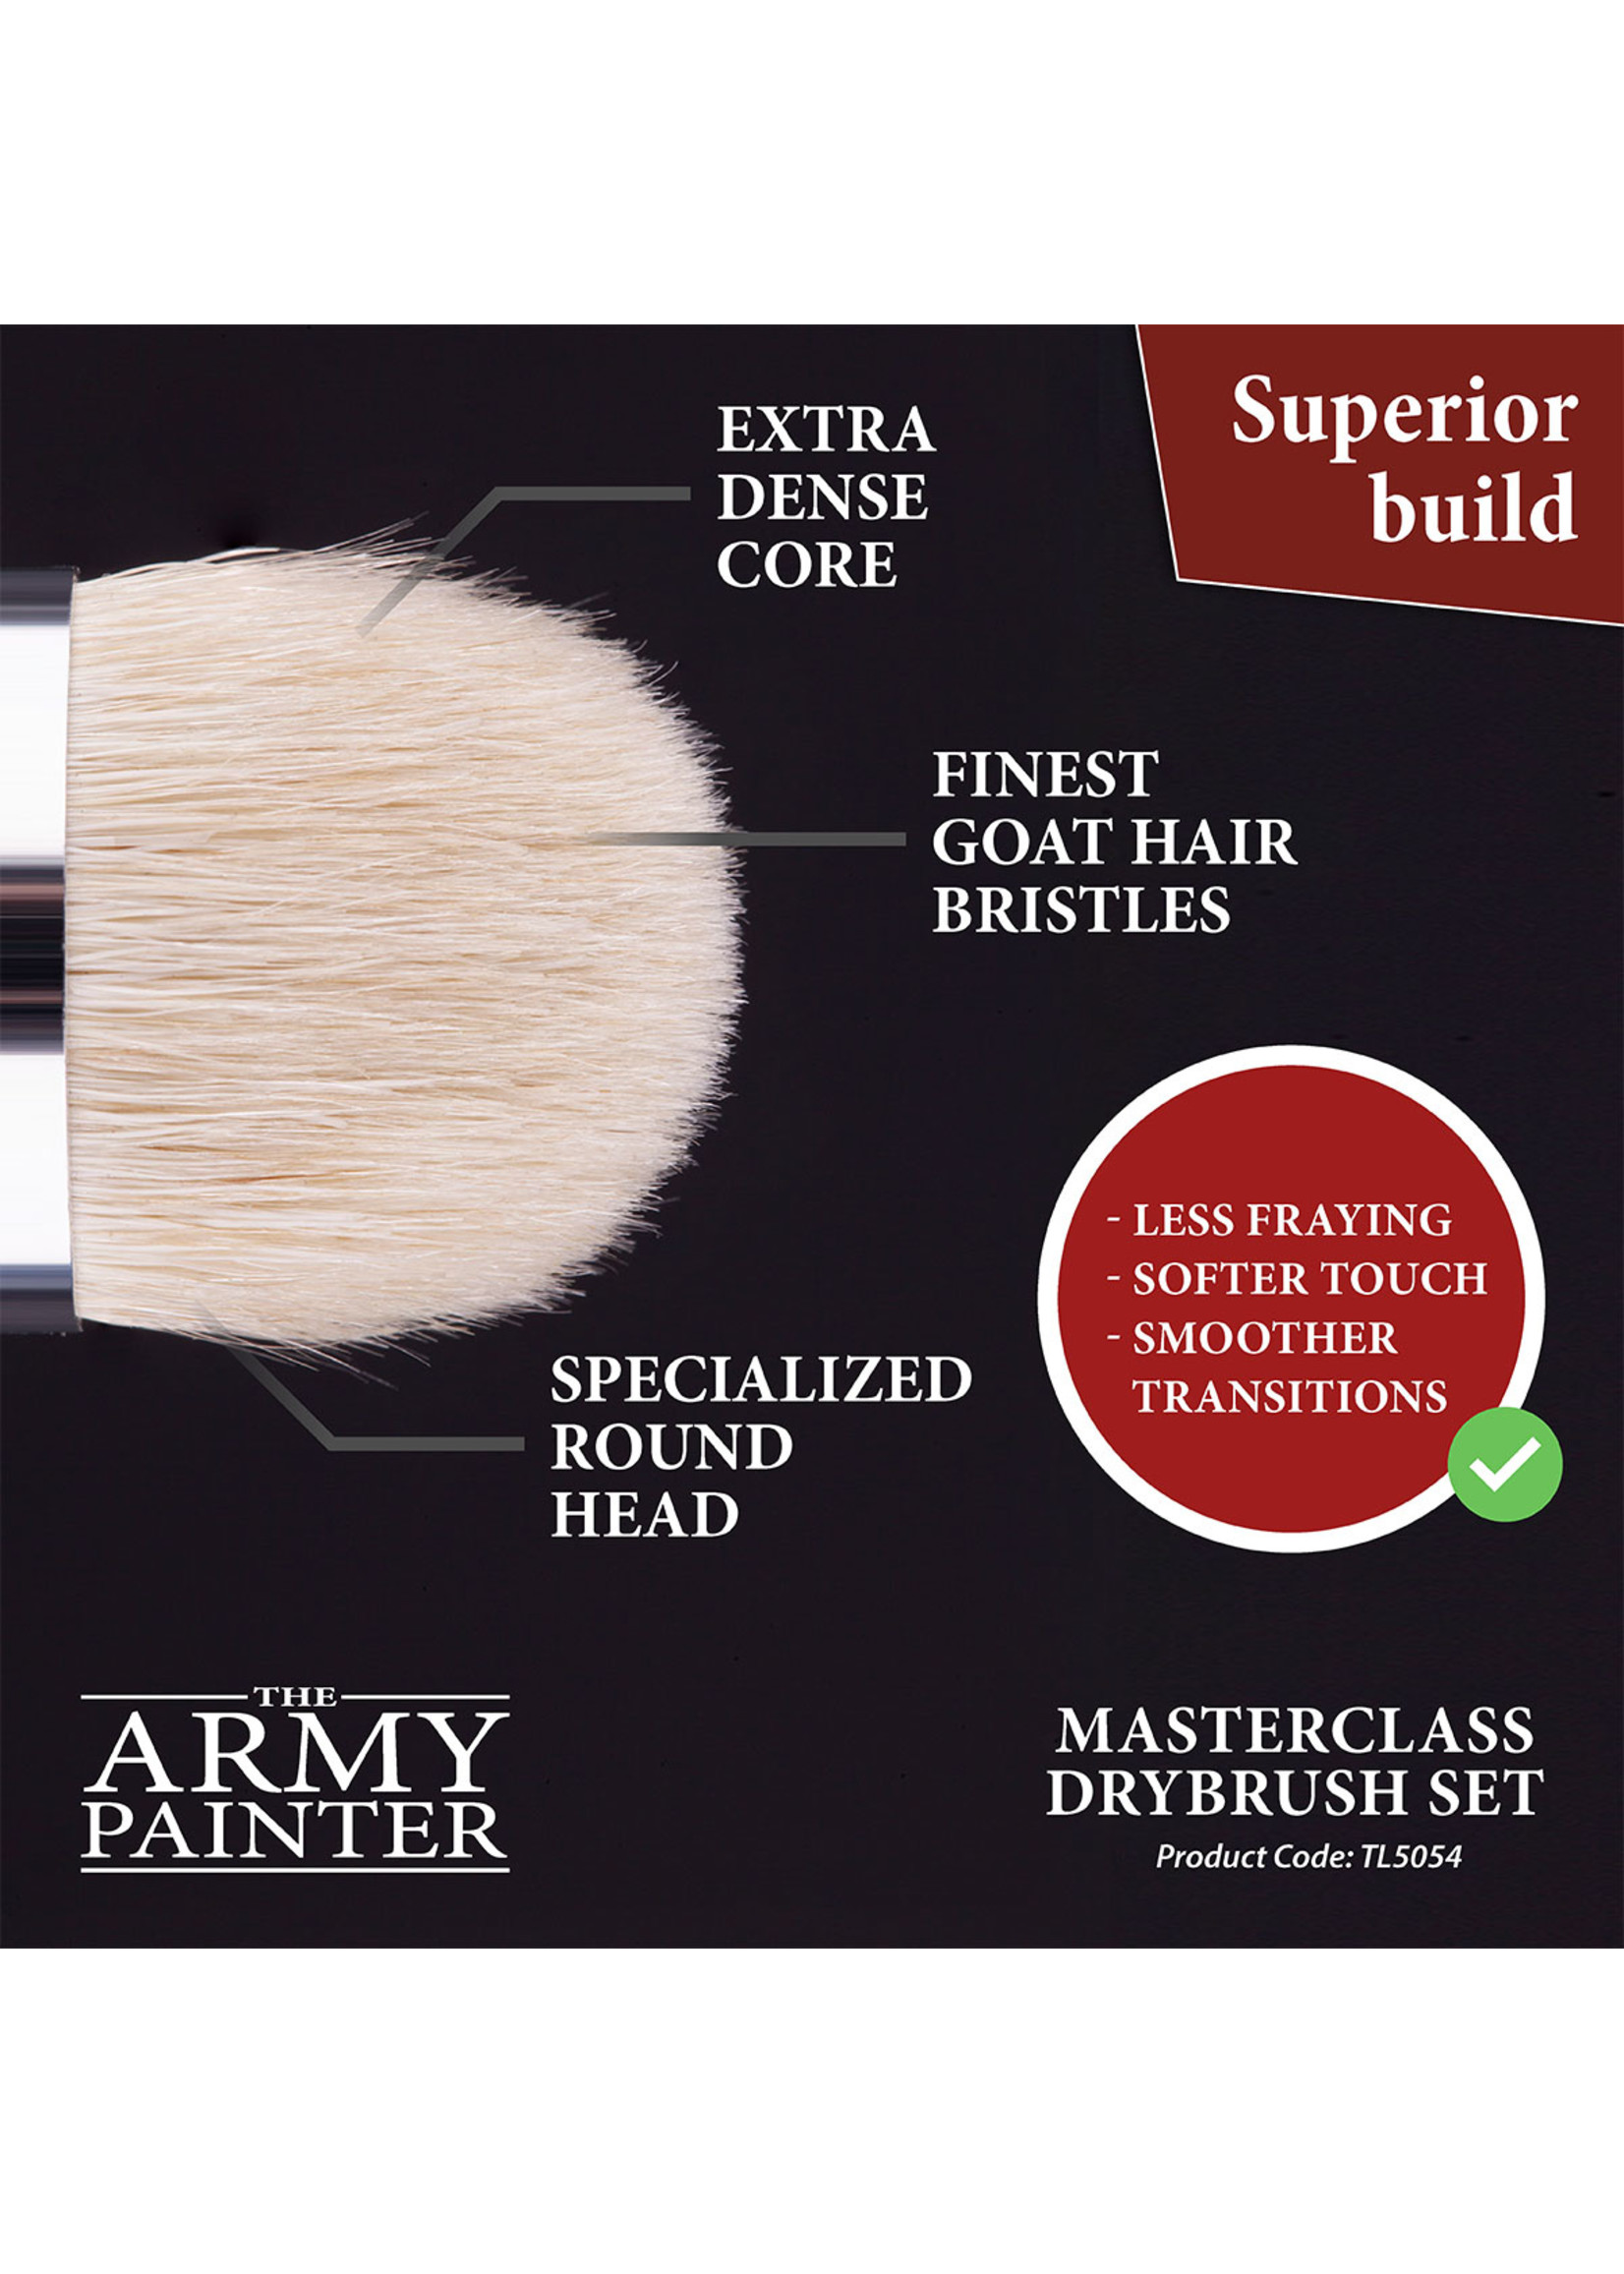 The Army Painter Masterclass Drybrush Set - The Army Painter